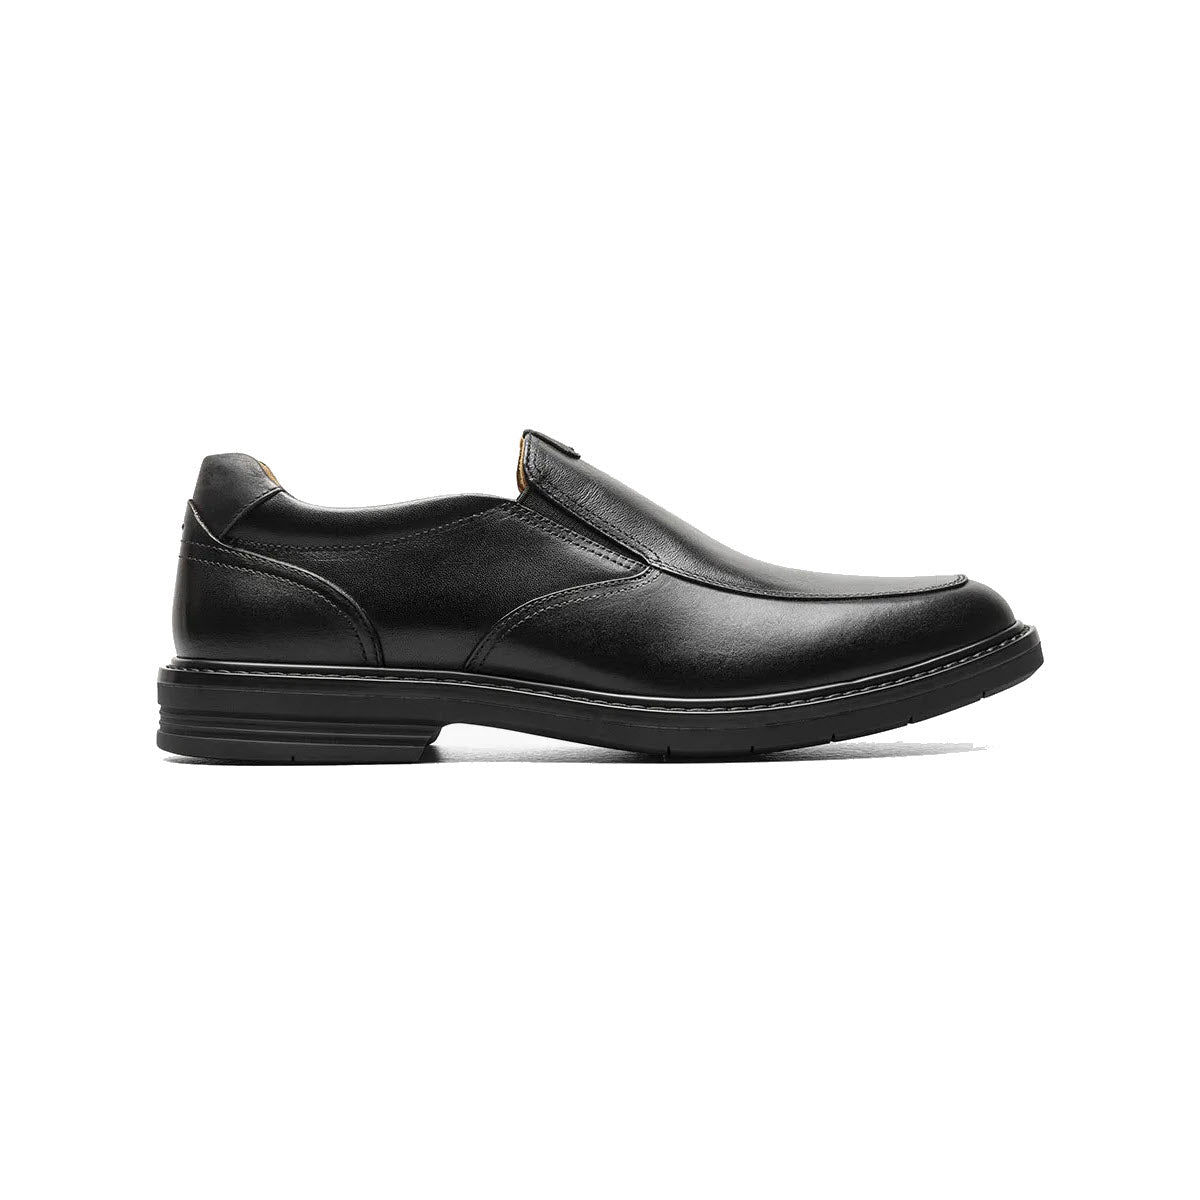 A single Florsheim FLORSHEIM NORWALK MOC TOE SLIP ON BLACK - MENS dress shoe with a low heel and elastic side panels, displayed against a white background.